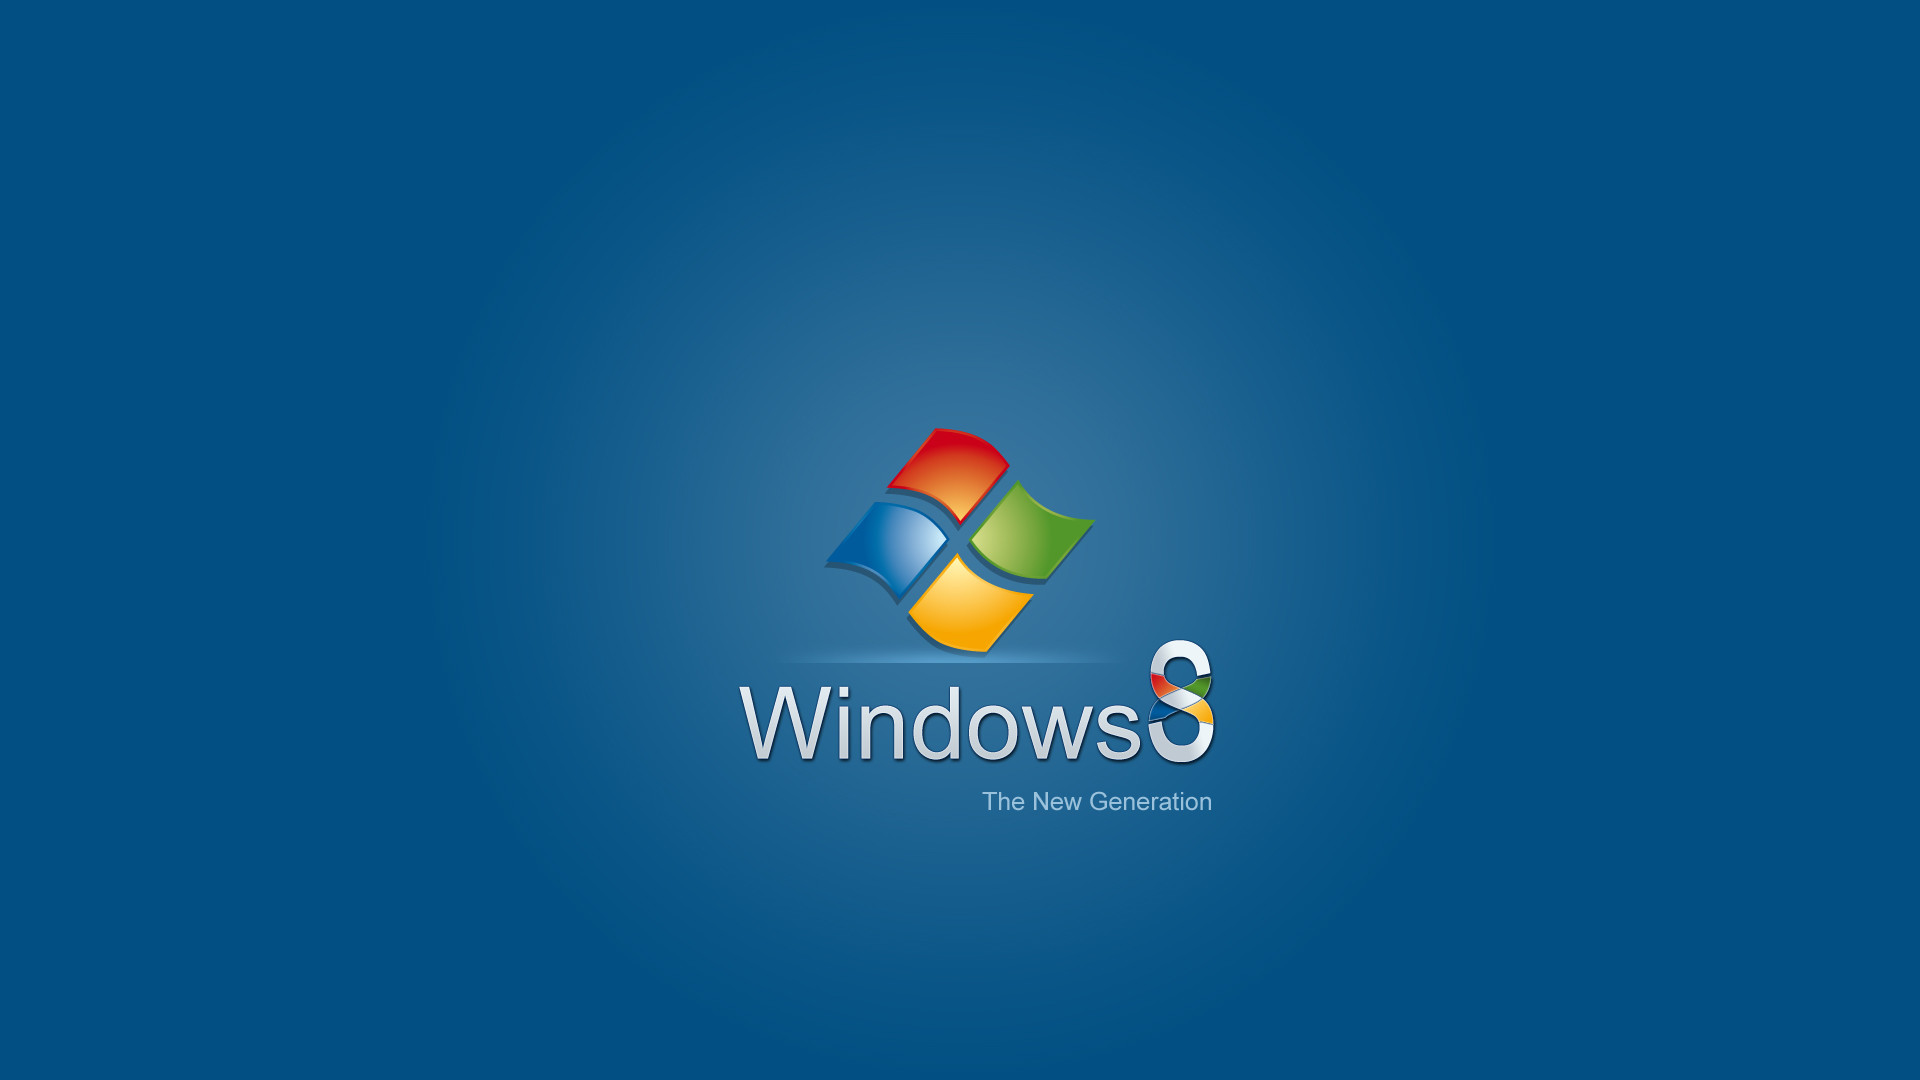 Microsoft Windows Xp Screensavers Free Download Free hd windows 8 wallpaper wallpapersafari